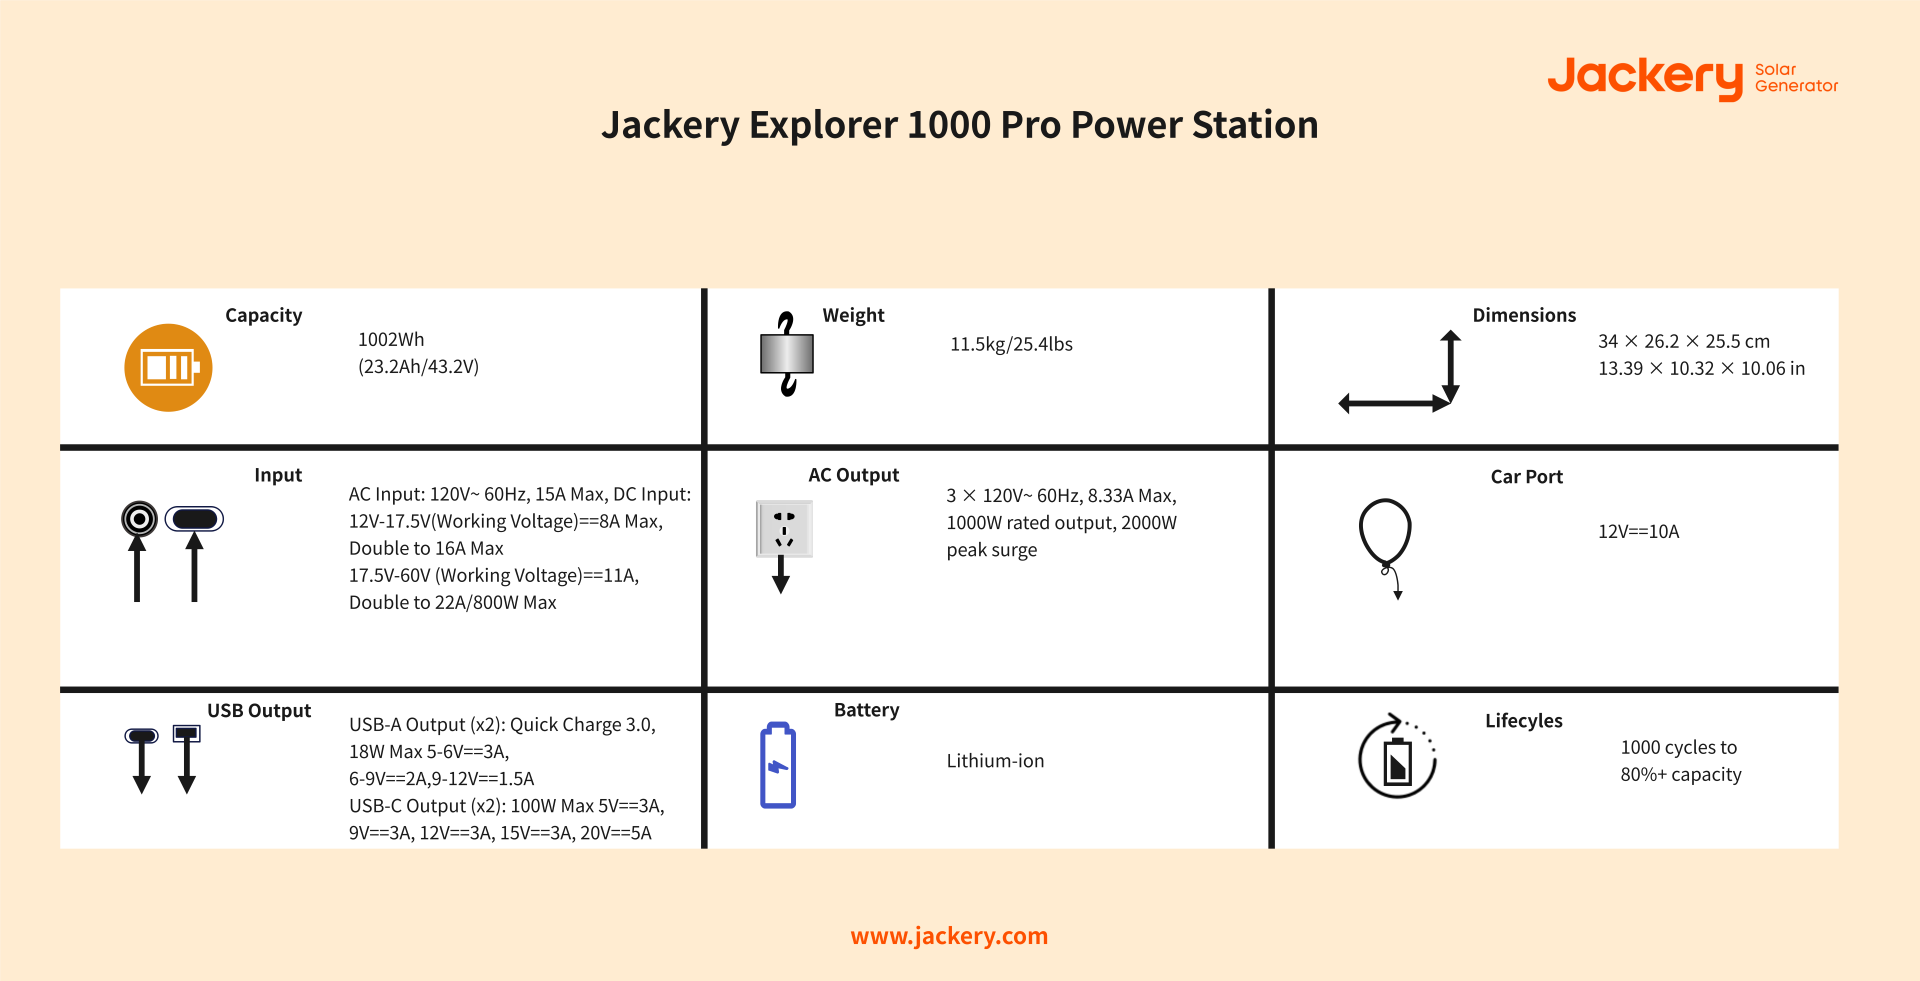 jackery explorer 1000 pro power station